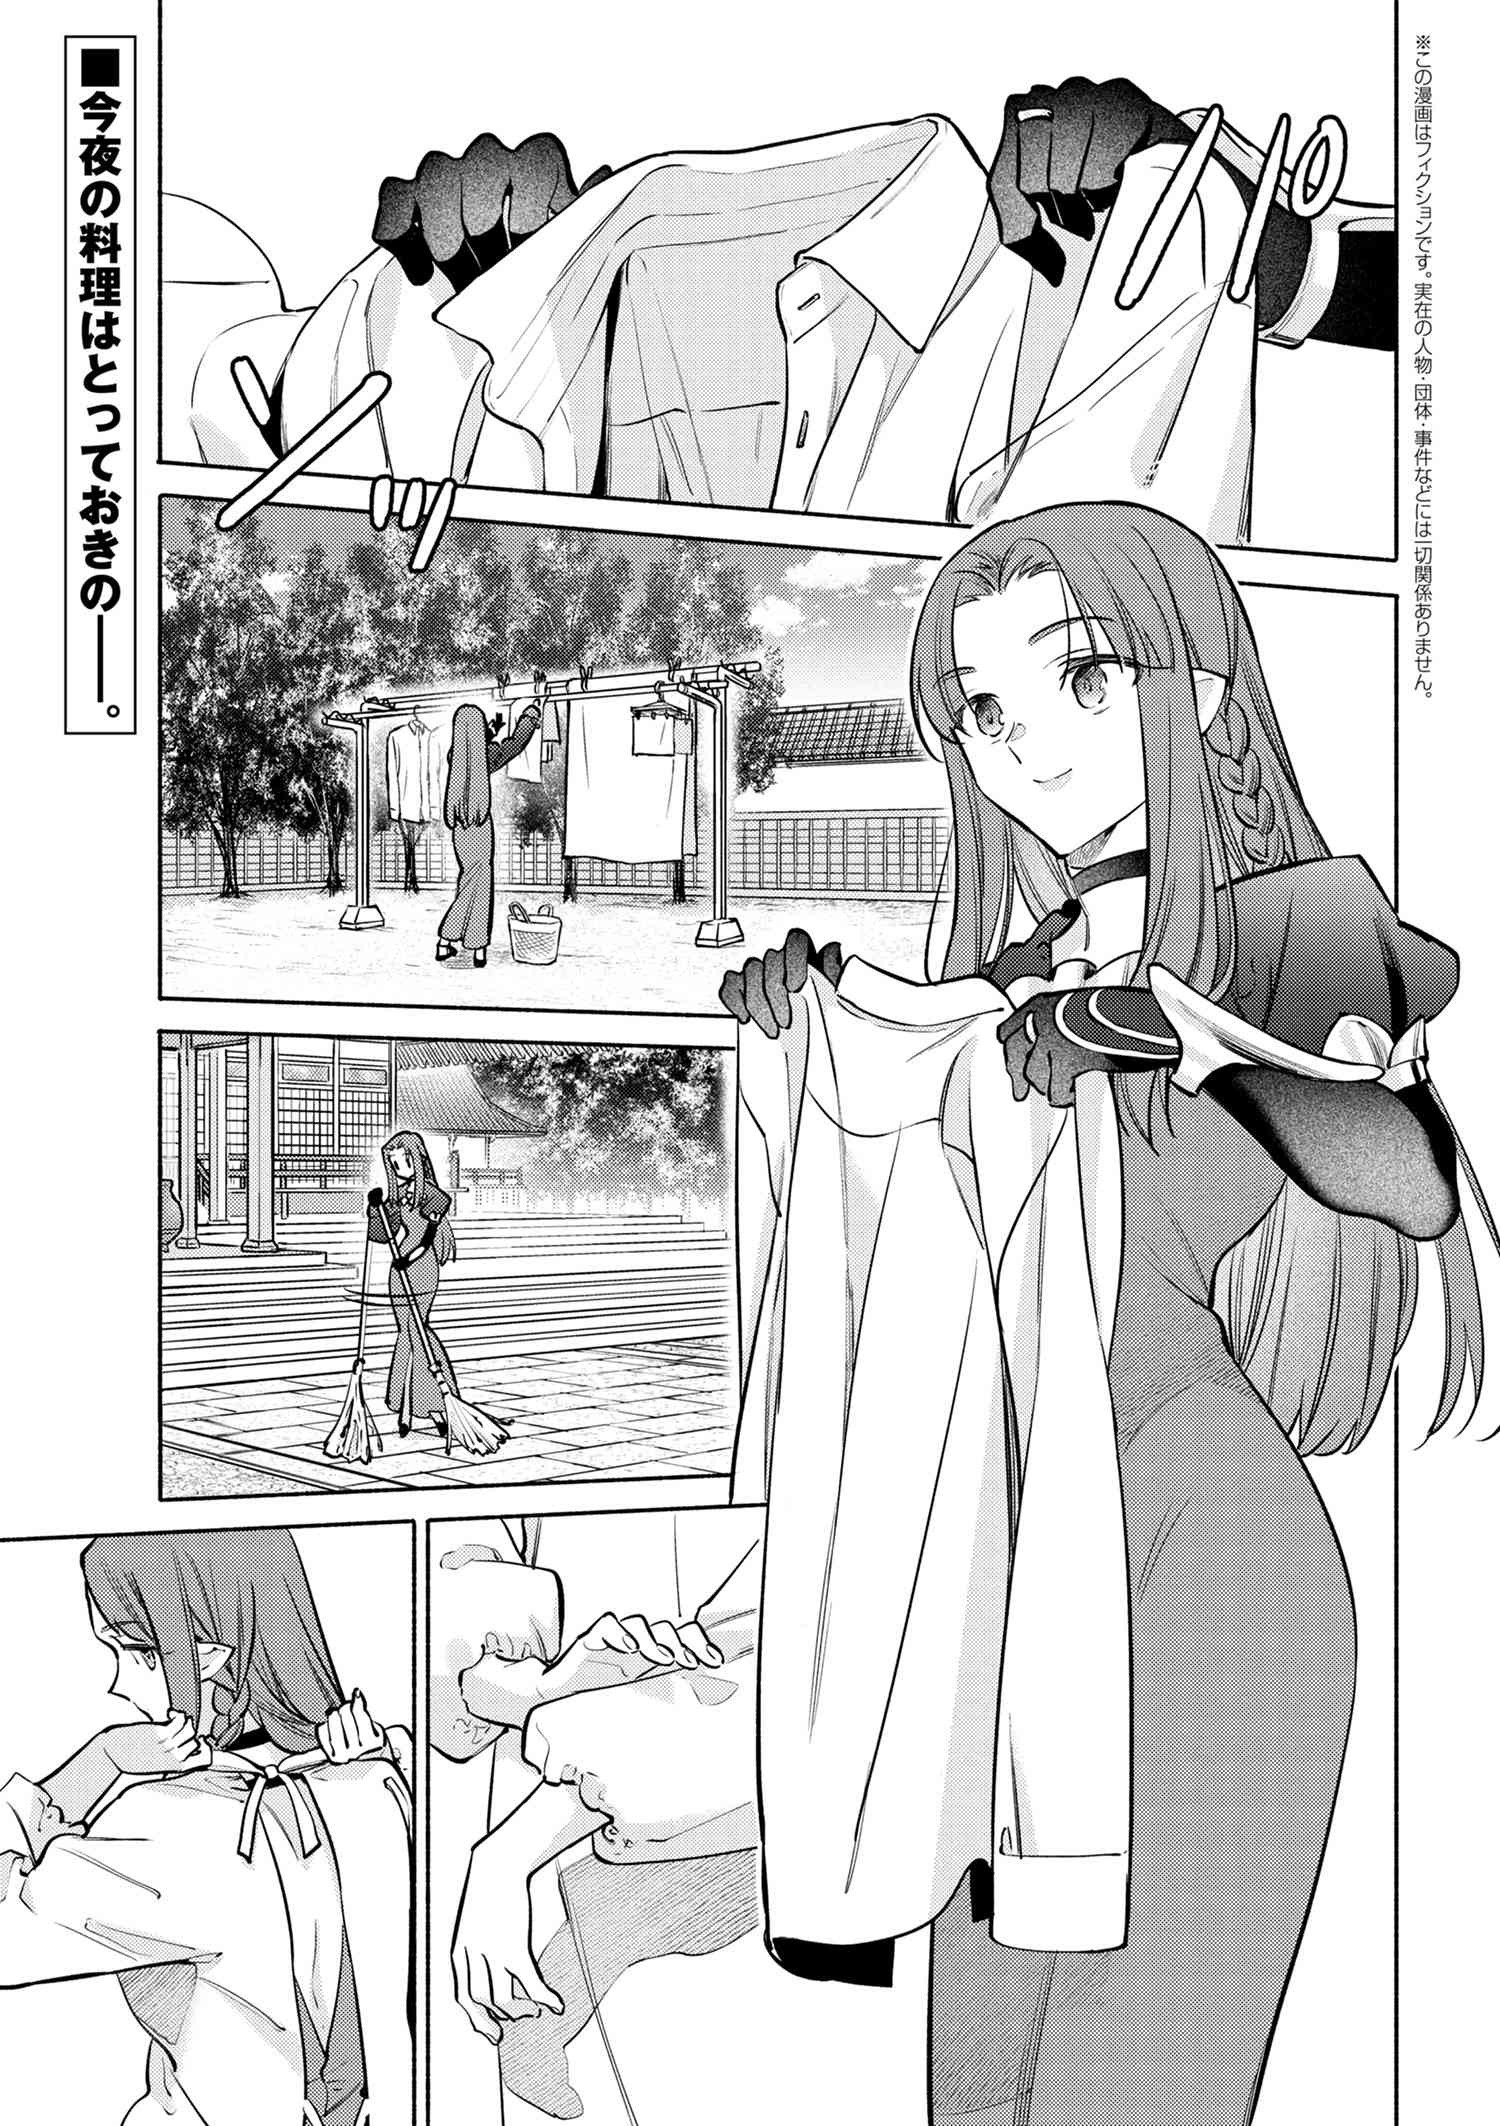 Emiya-san Chi no Kyou no Gohan - Chapter 45 - Page 1